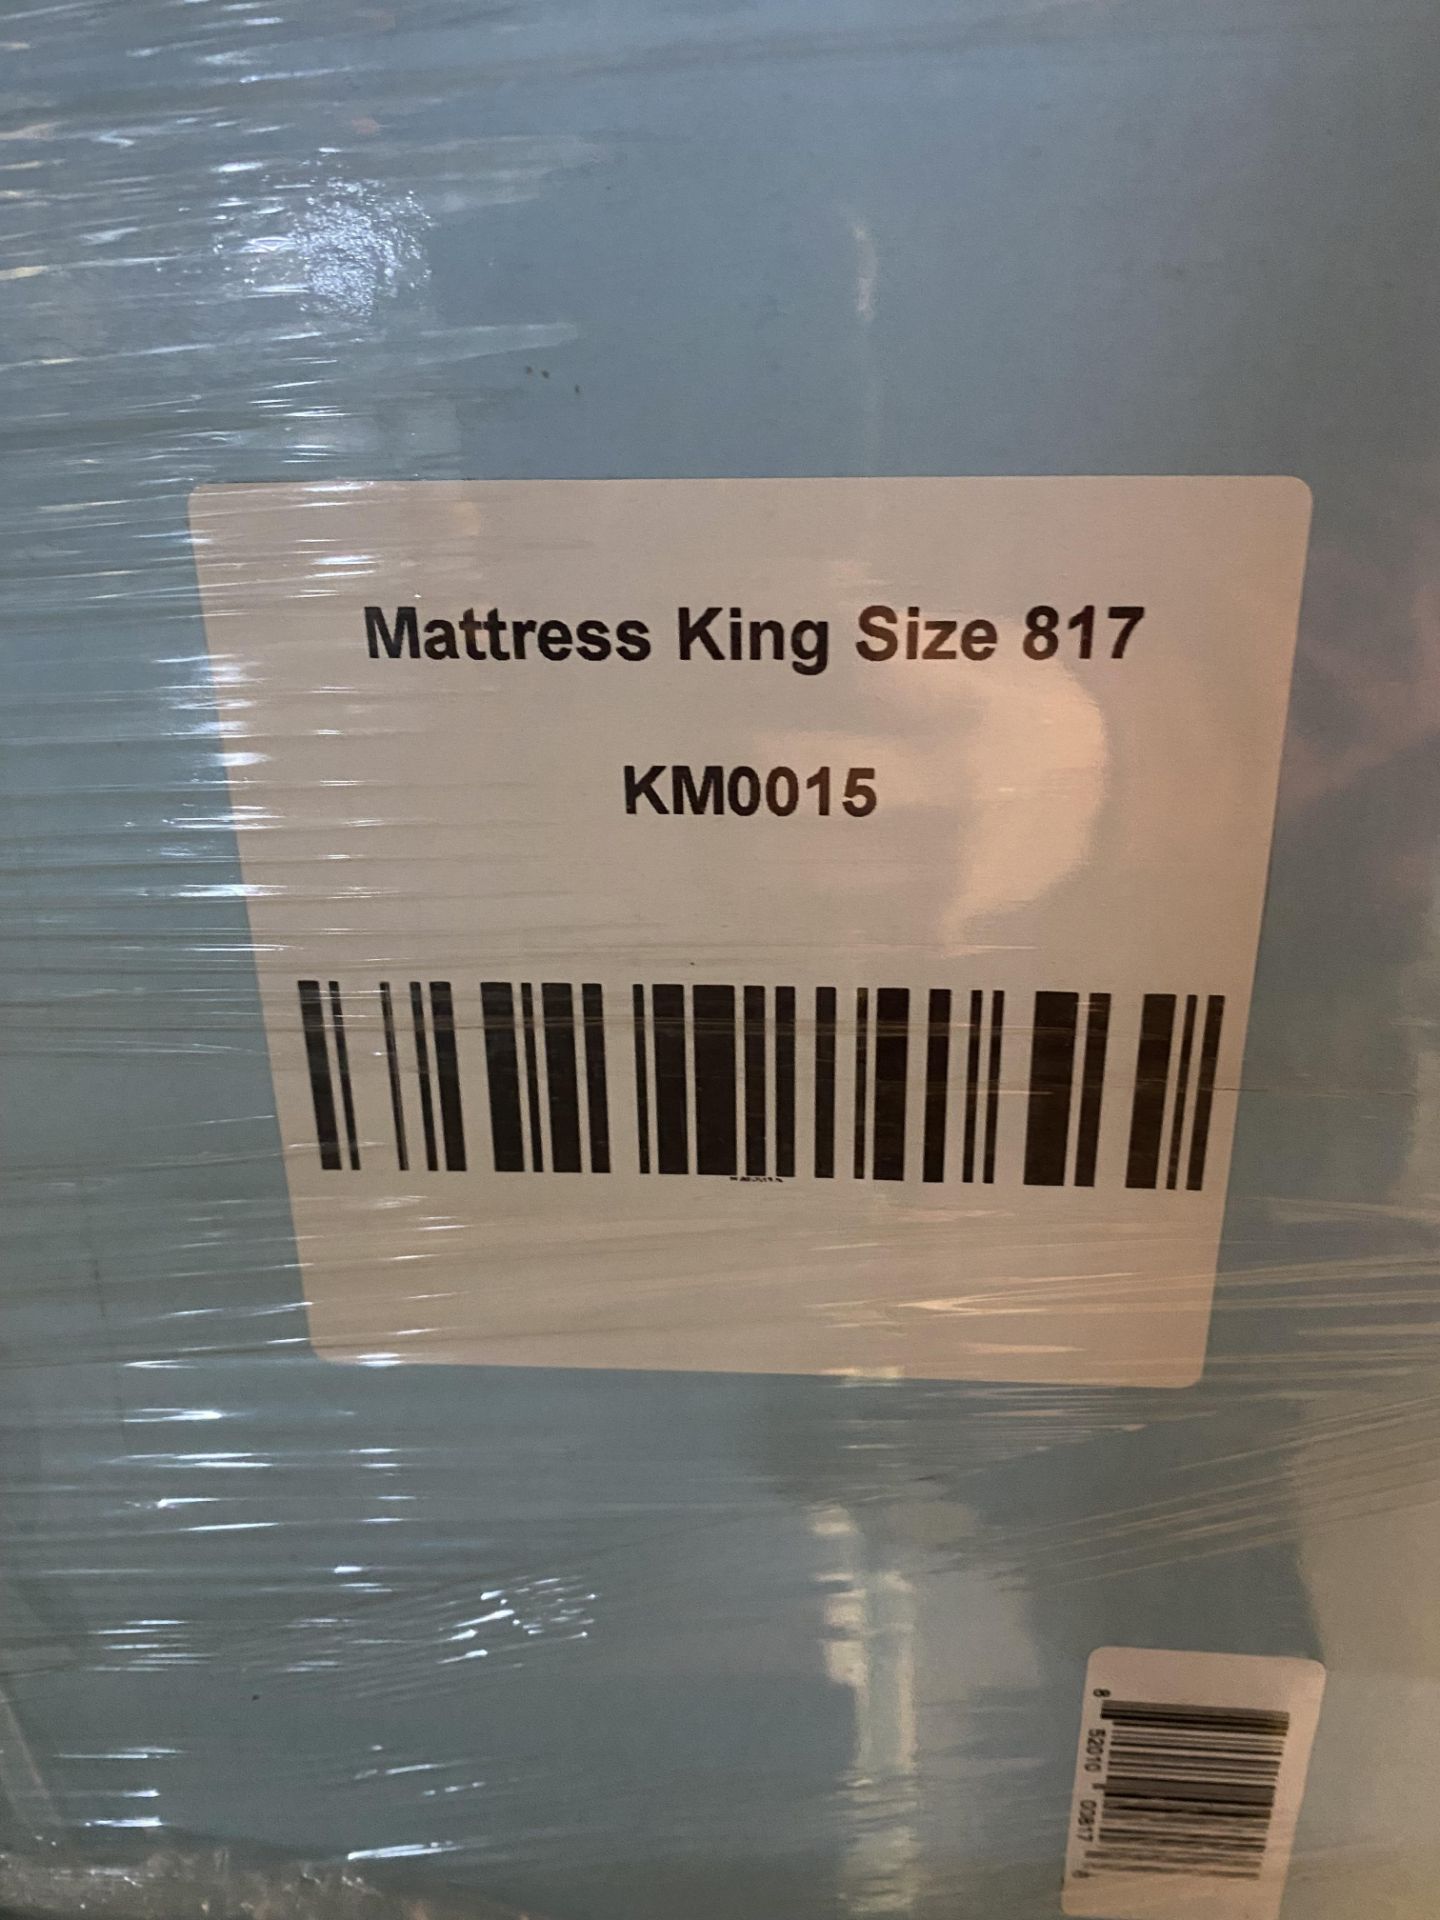 ComfaSleep KM0015 King Size 817 Mattress - Image 6 of 6